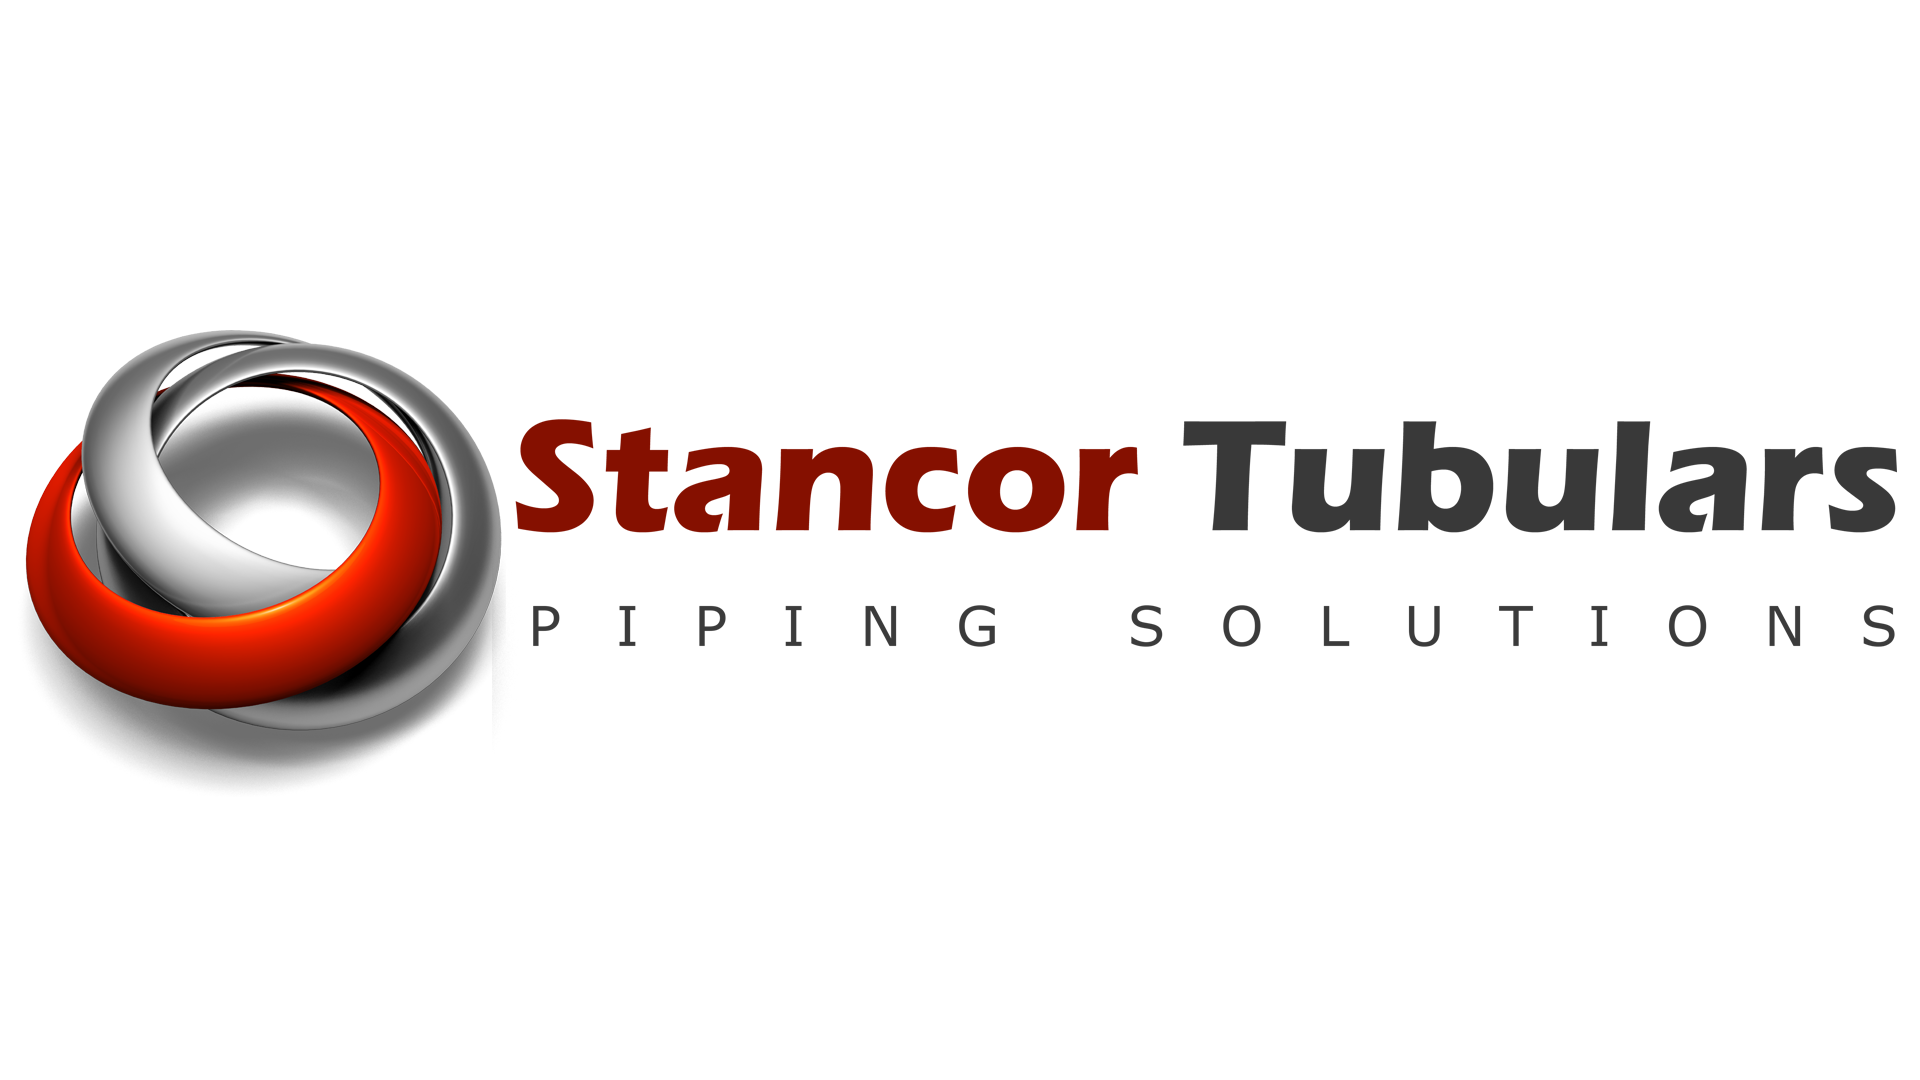 Stancor Tubular Products Pvt Ltd